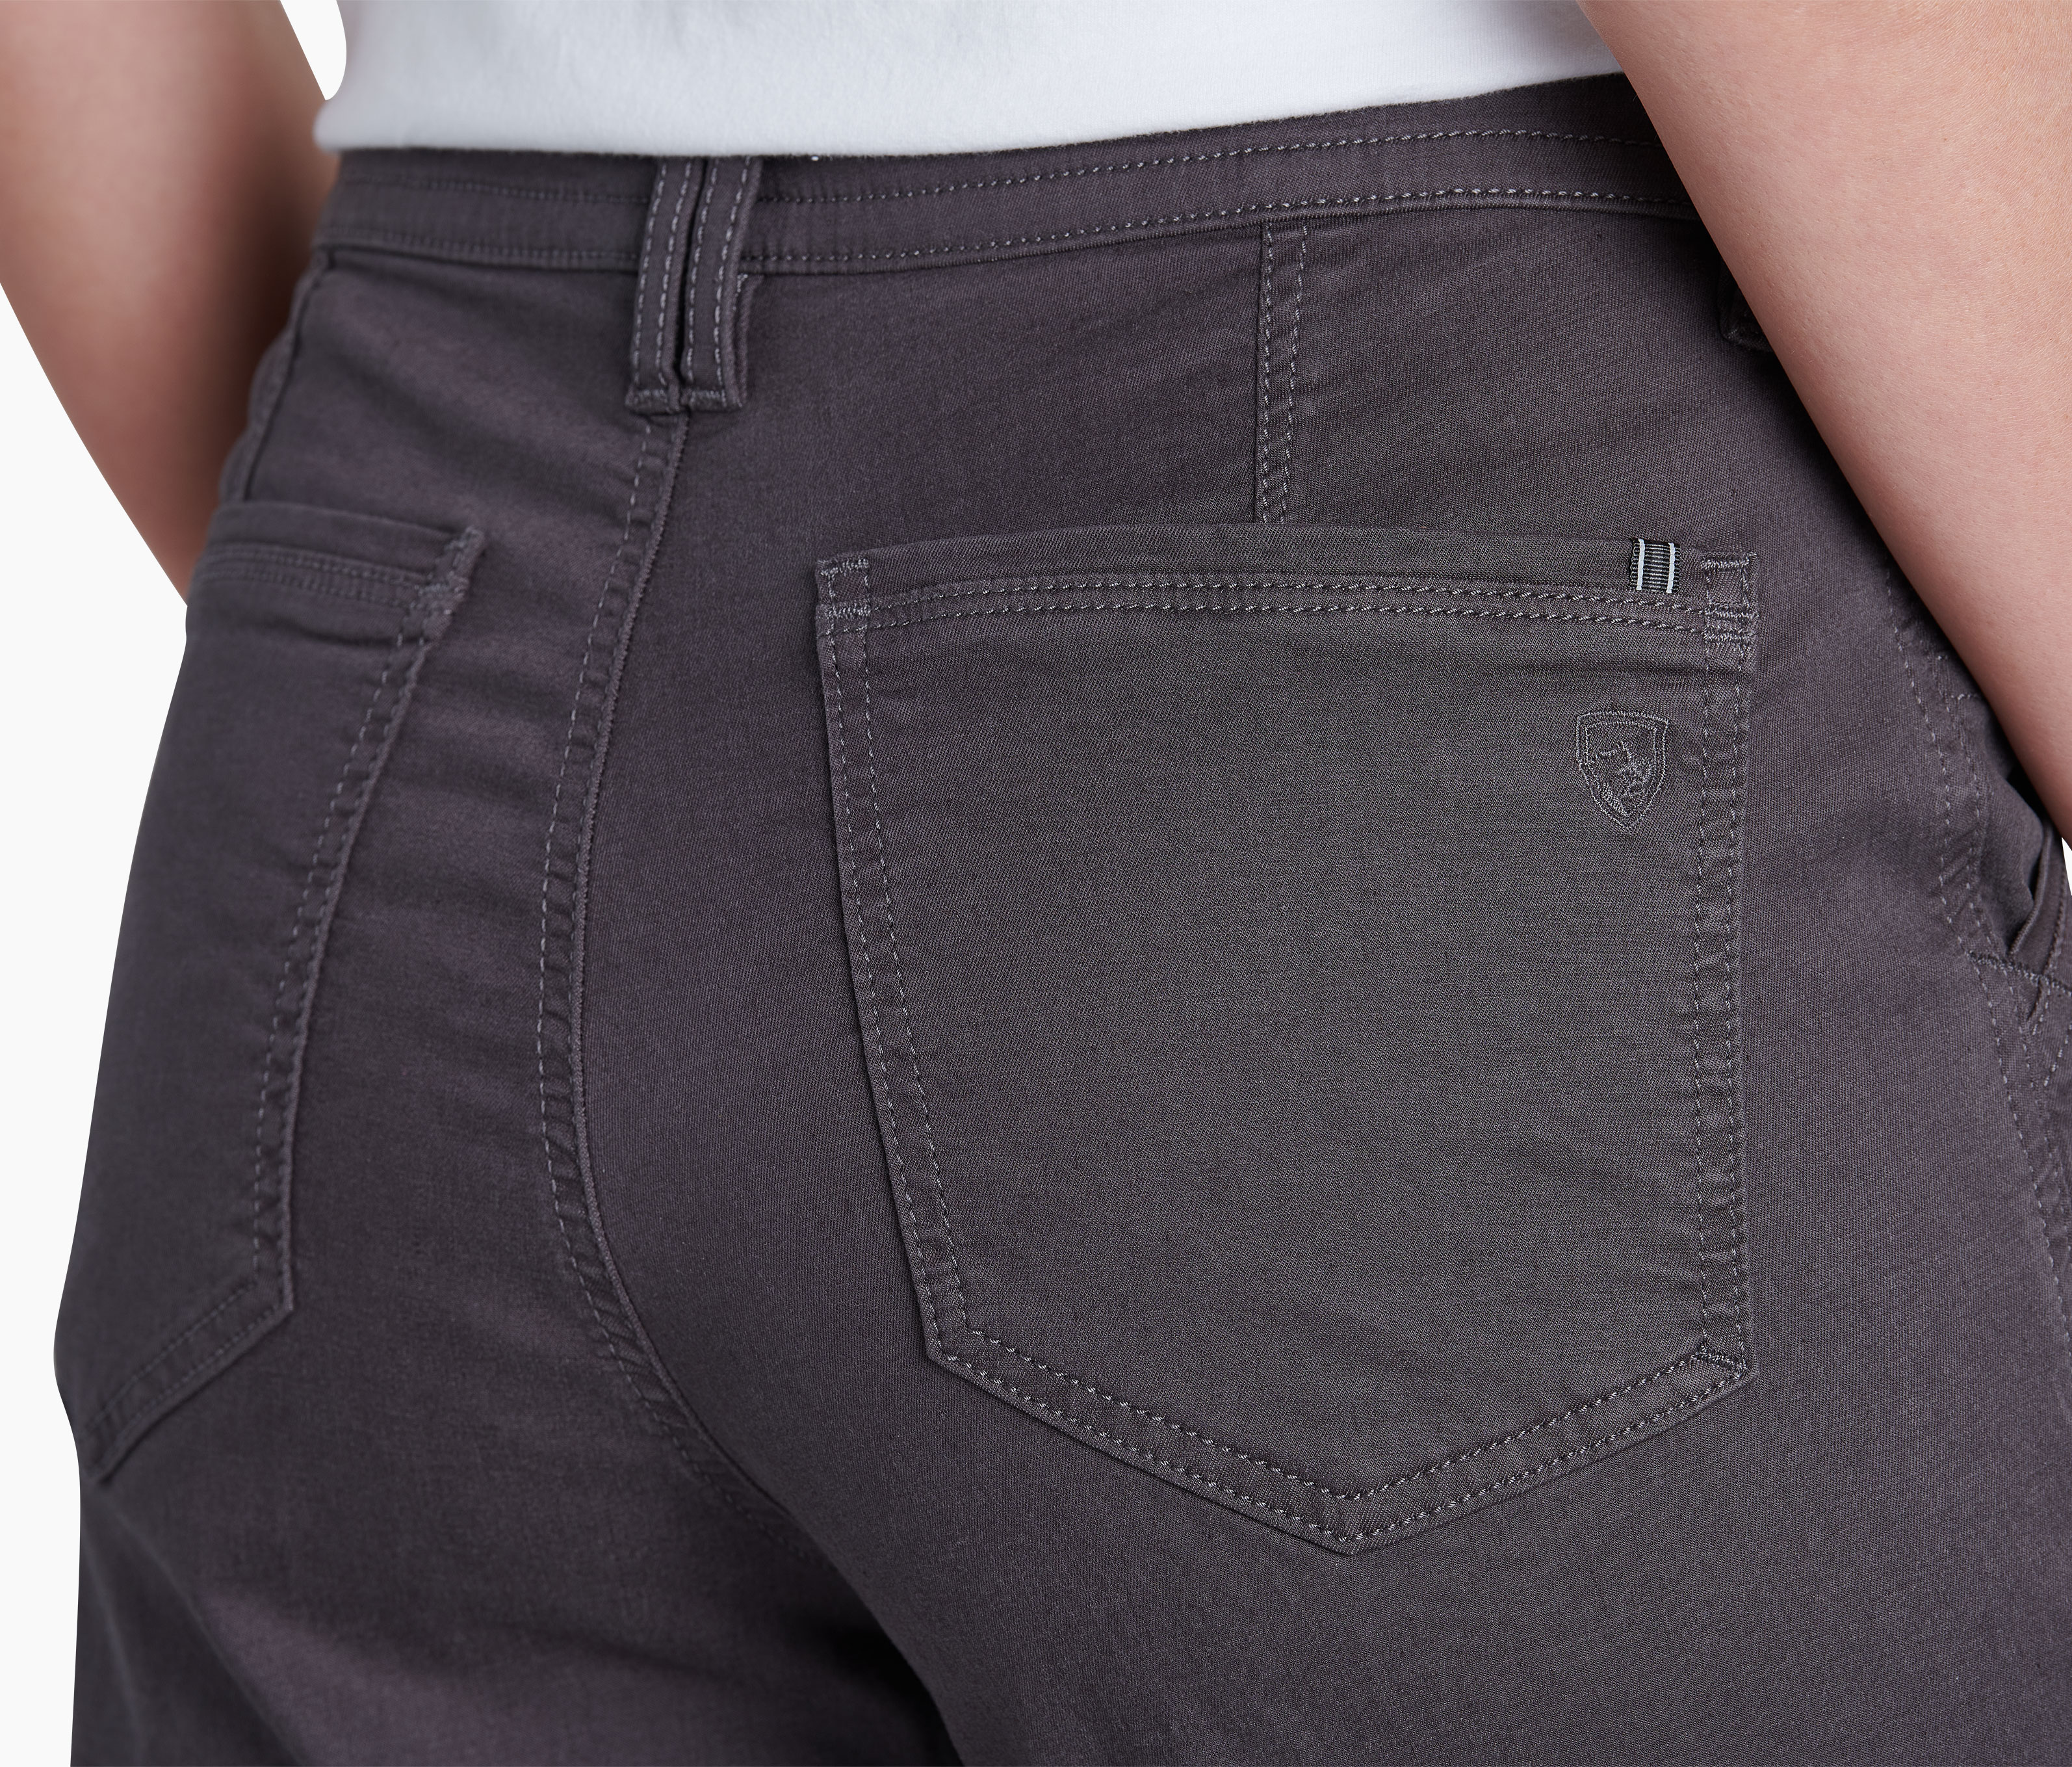 Kultivatr™ Straight in Women's Pants